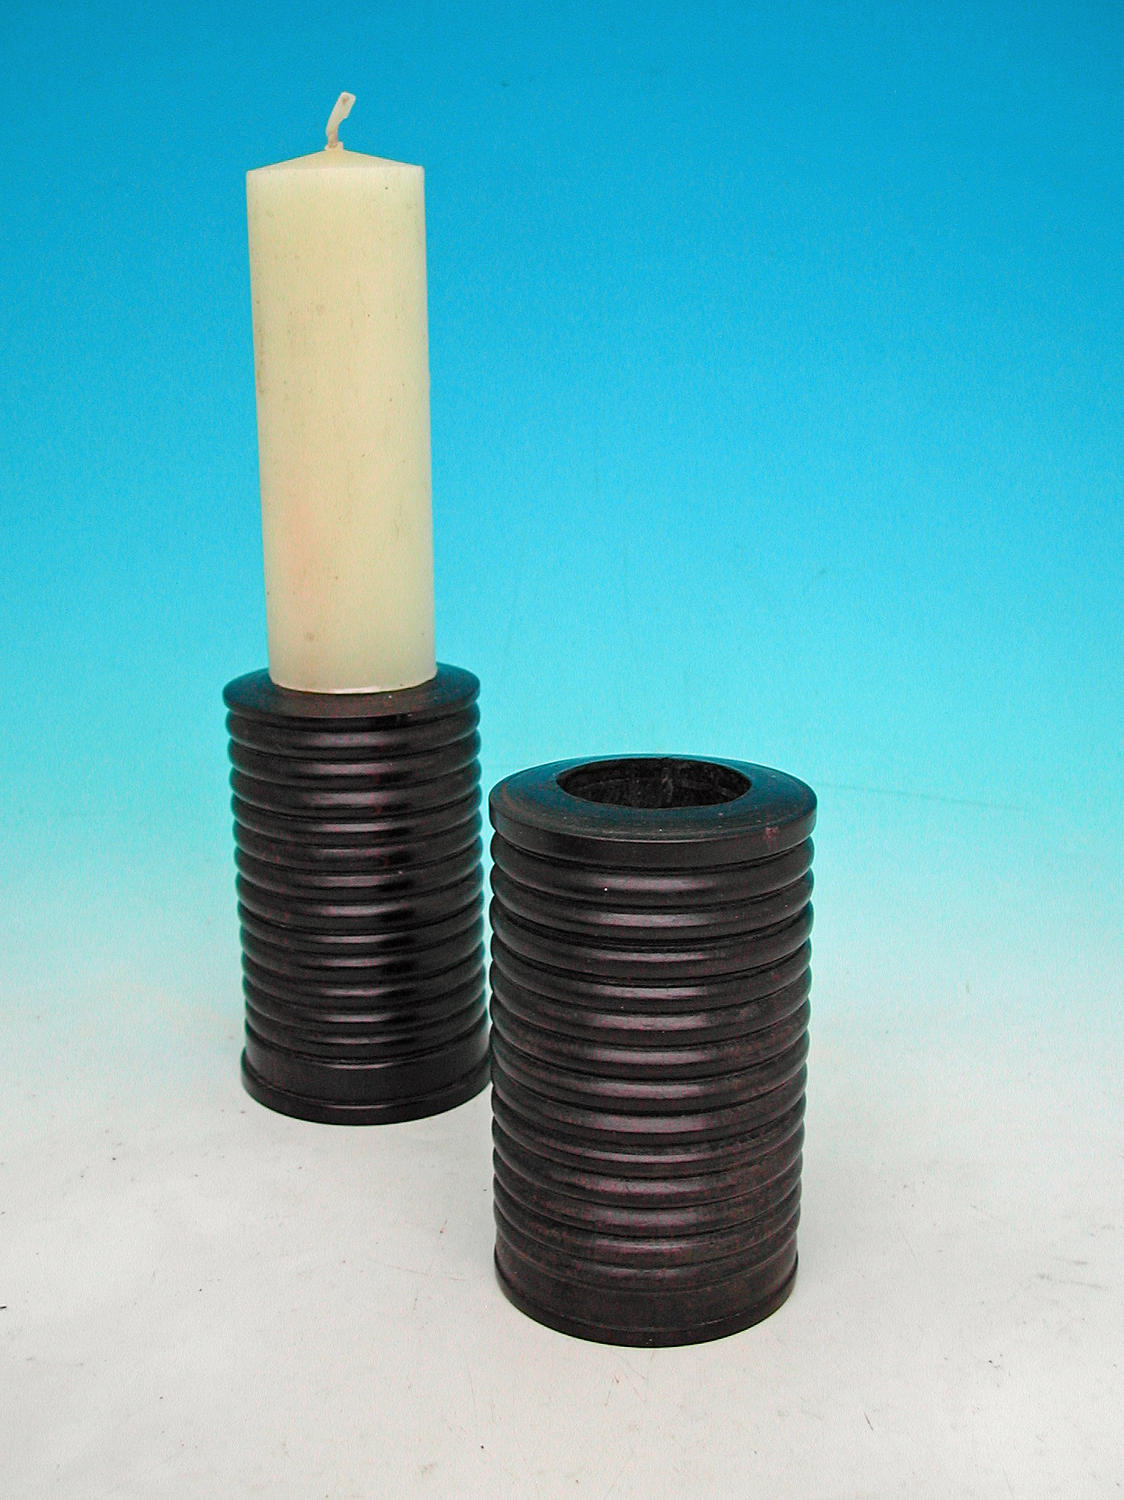 19thc Pair Of Lignum Vitae Turned Candlesticks. English C1820 - 40